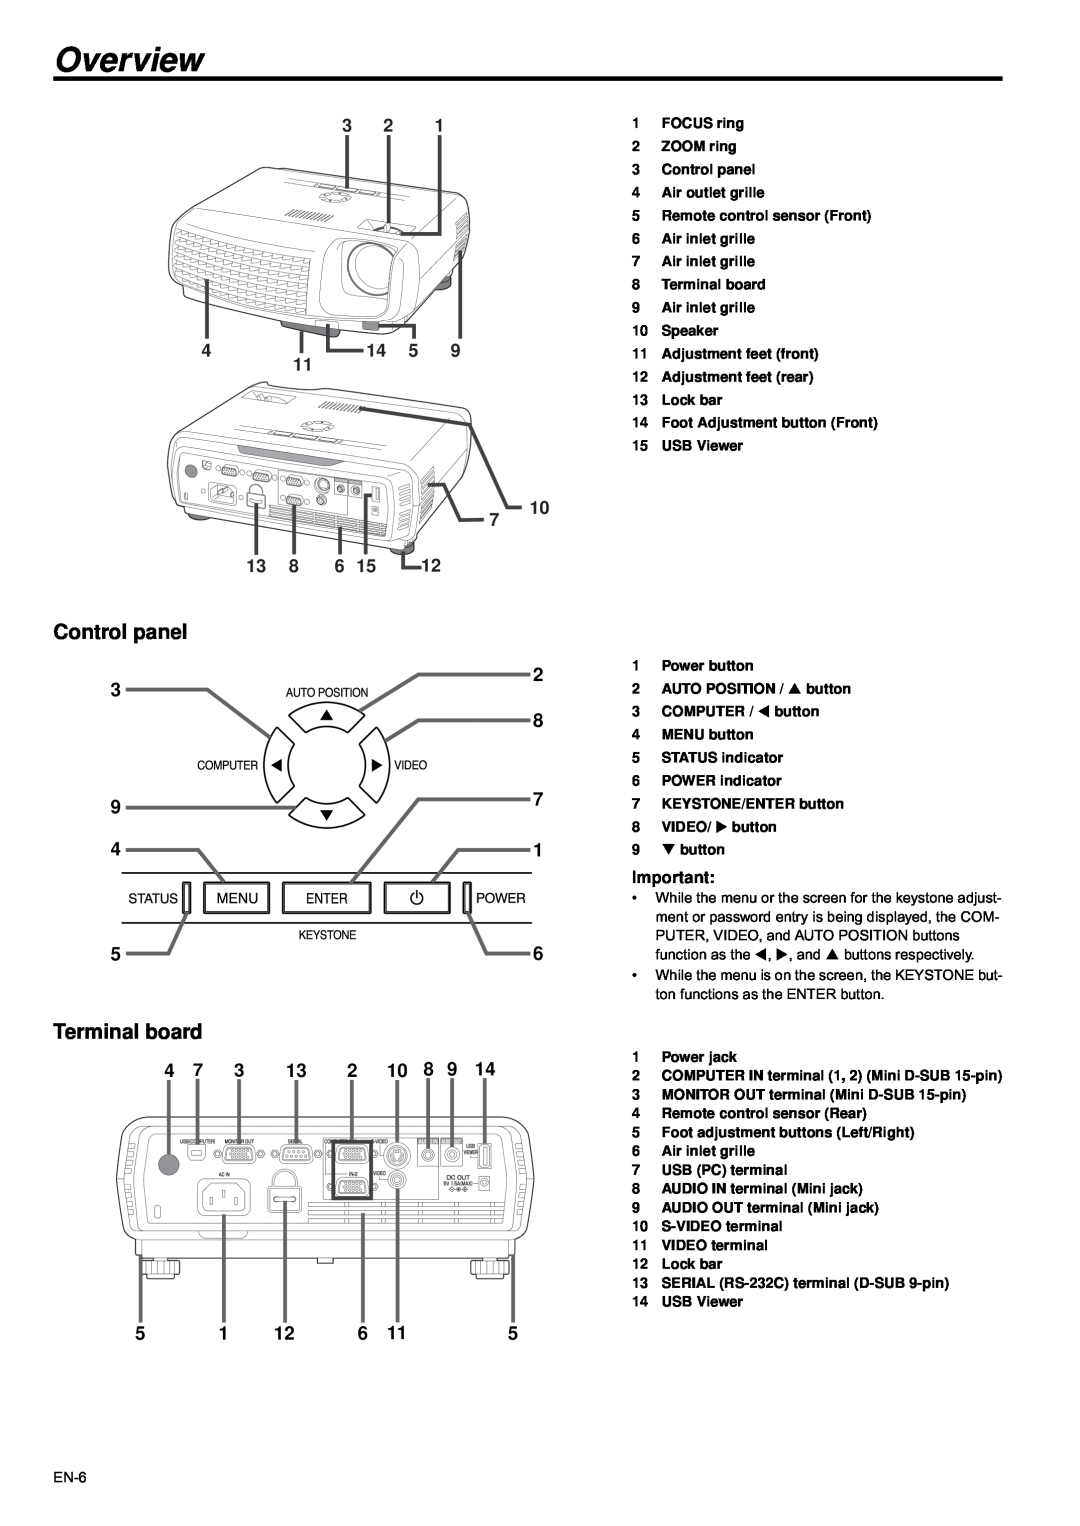 Mitsubishi Electronics XD435U-G user manual Overview, Control panel, Terminal board, 13 8 6 15 